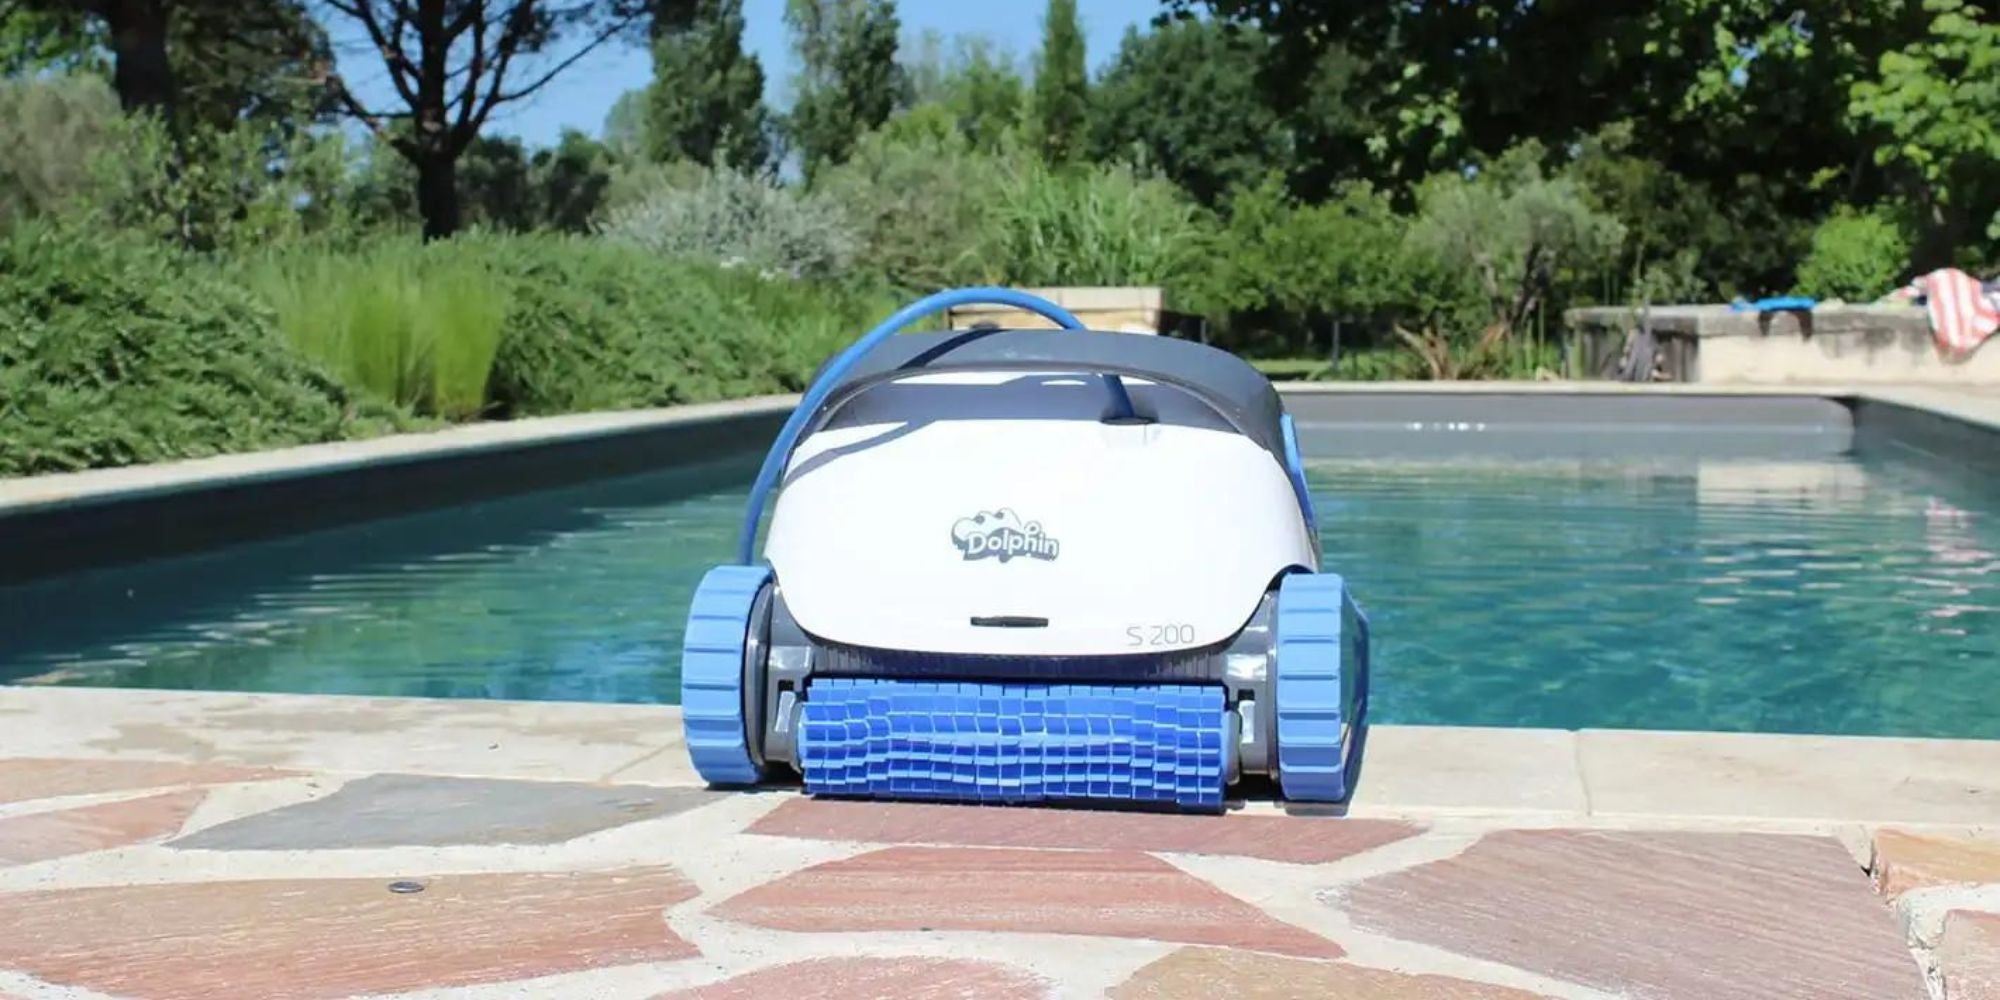 Robot nettoyage piscine : robot nettoyeur de piscine